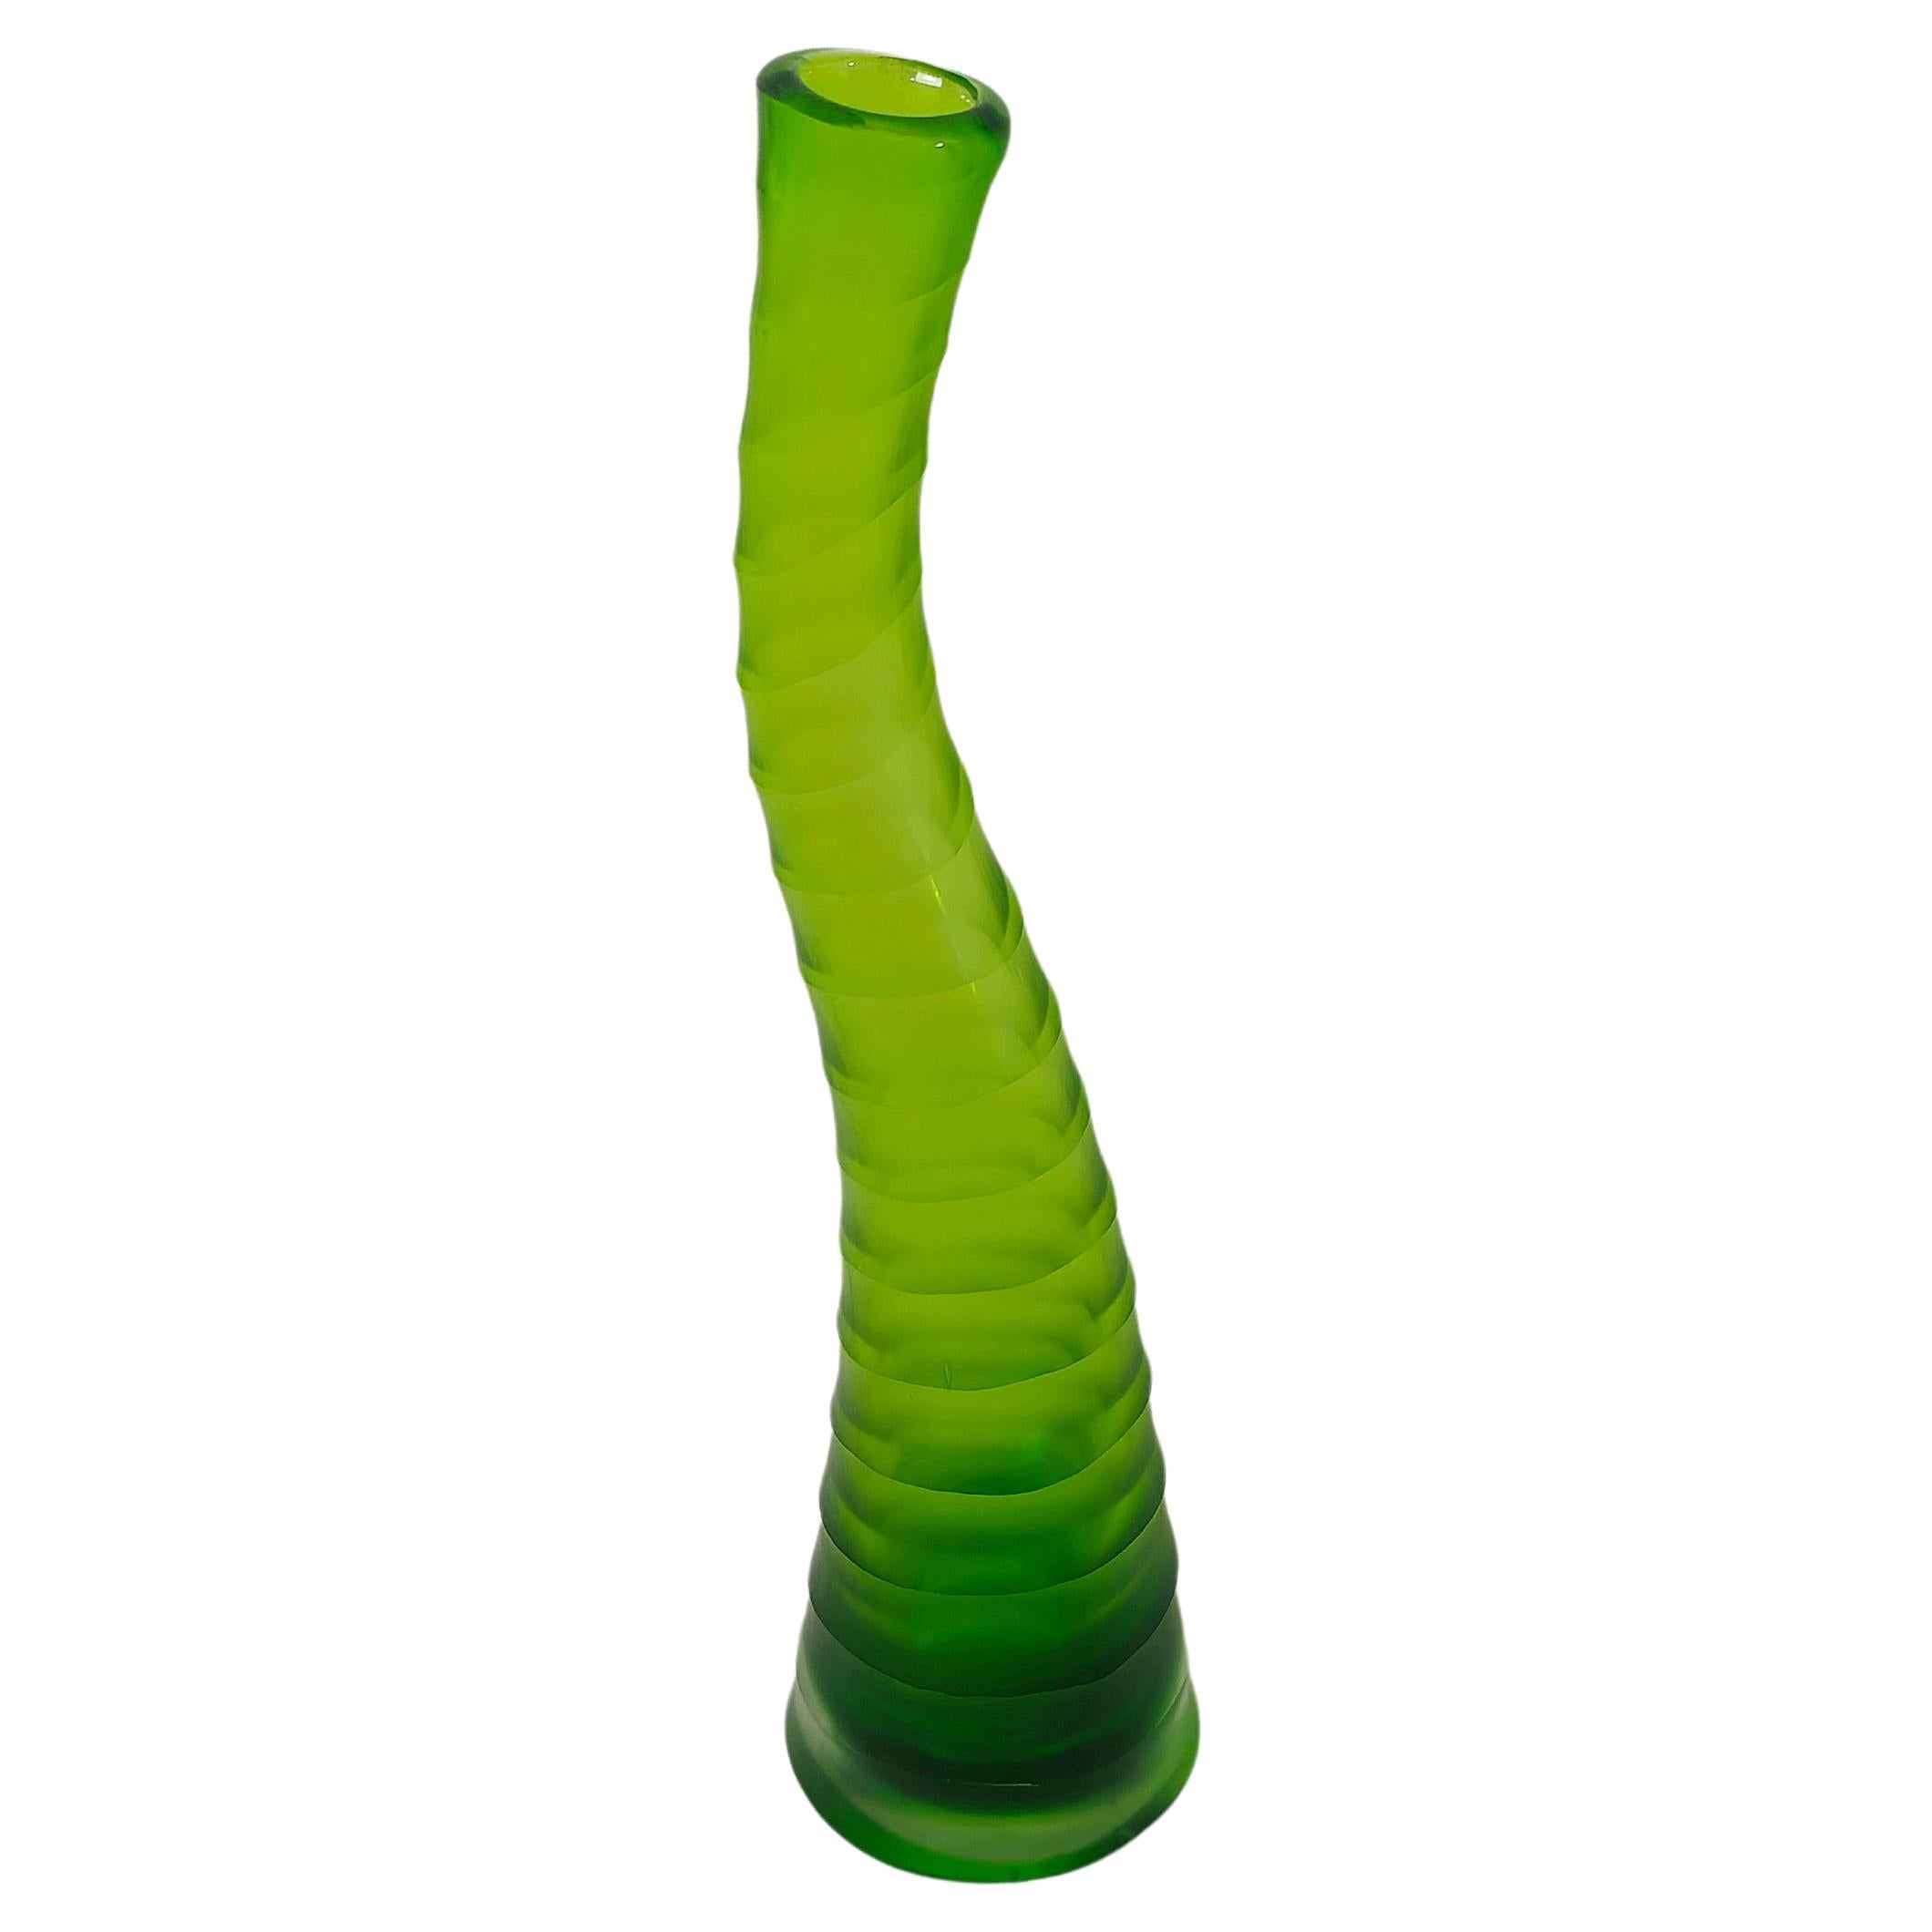 Vase Decorative Object Murano Glass Green Midcentury Modern Italian Design 1970s